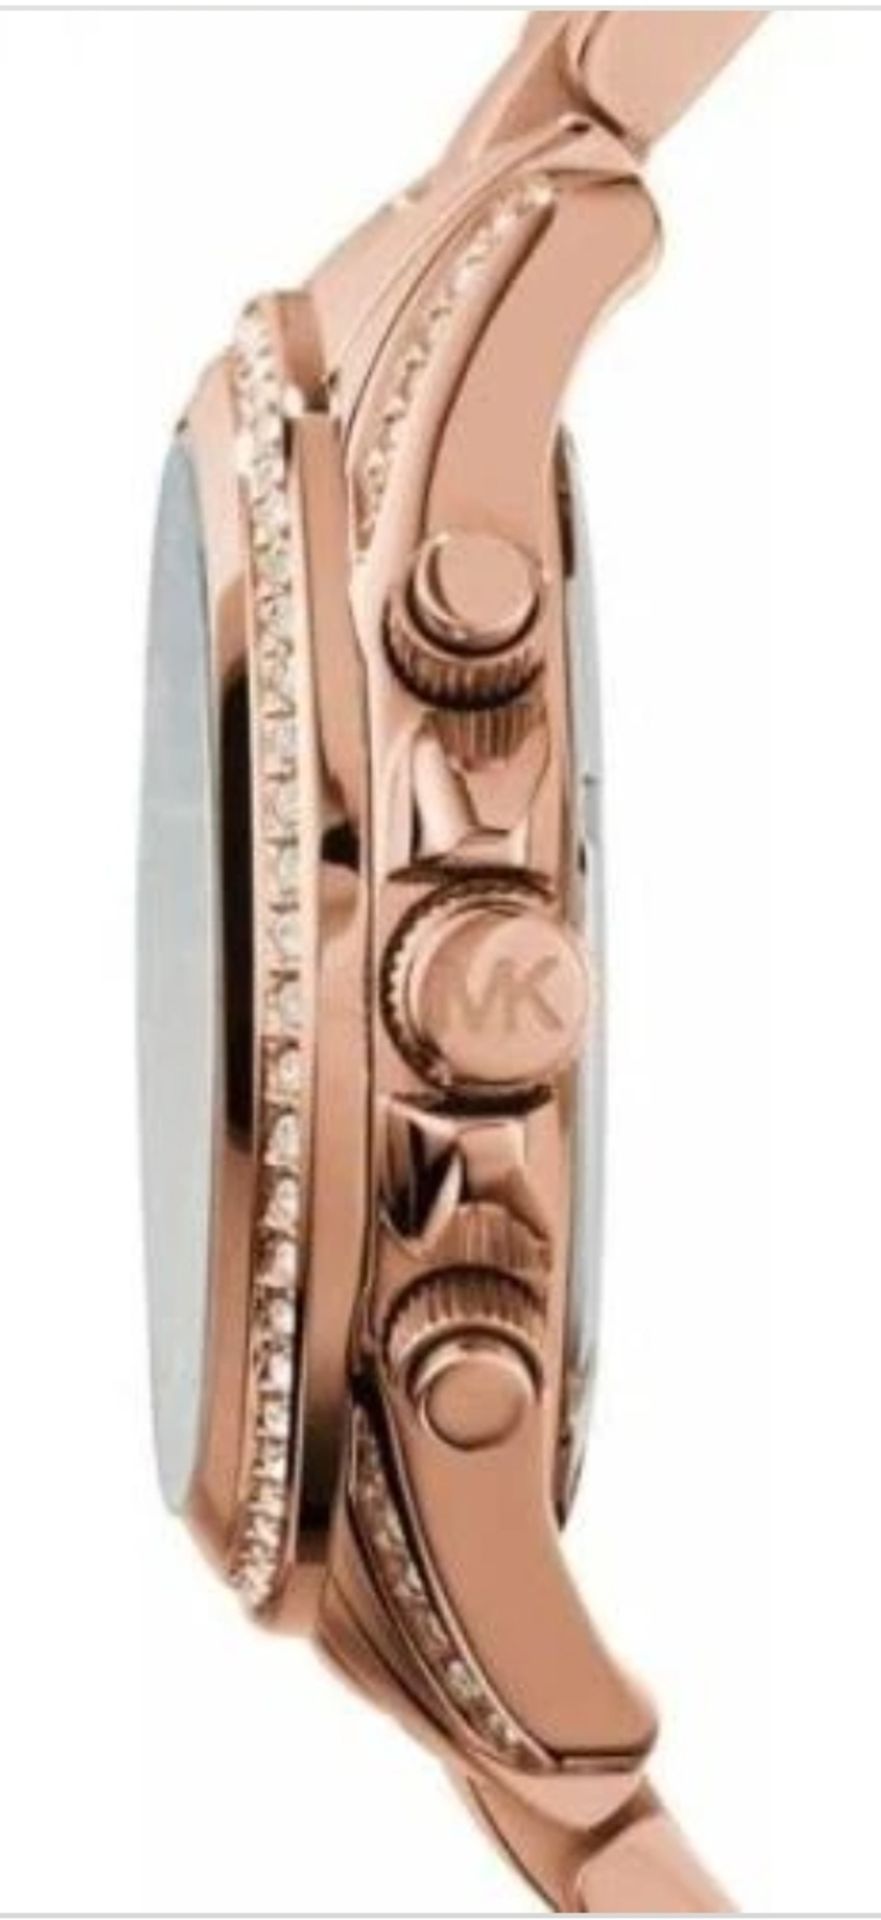 Michael Kors MK5263 Ladies Blair Chronograph Watch - Image 4 of 6